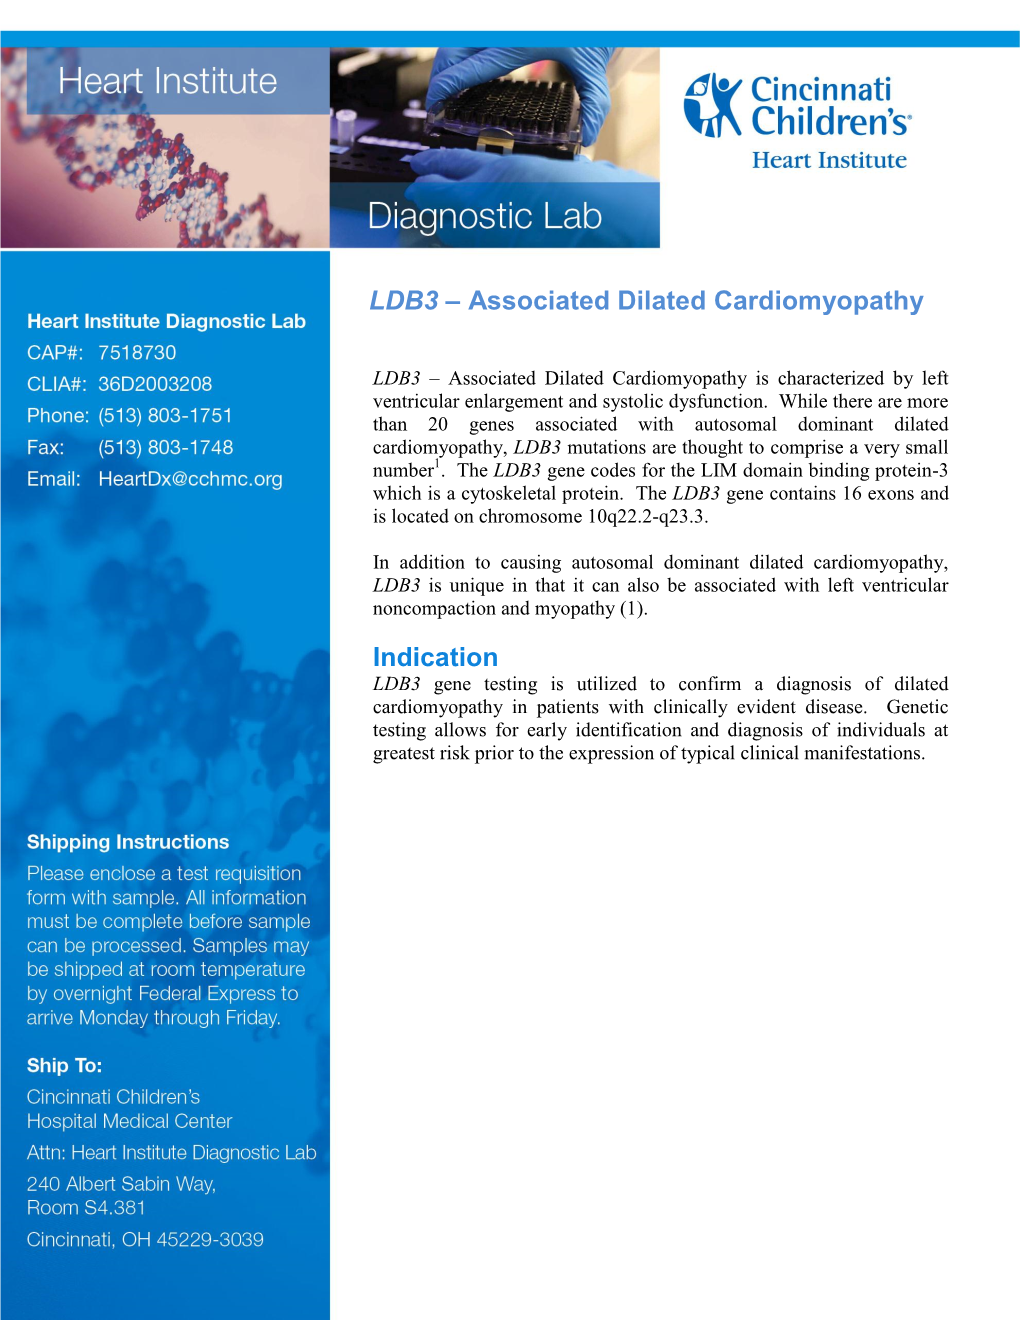 LDB3 – Associated Dilated Cardiomyopathy Indication